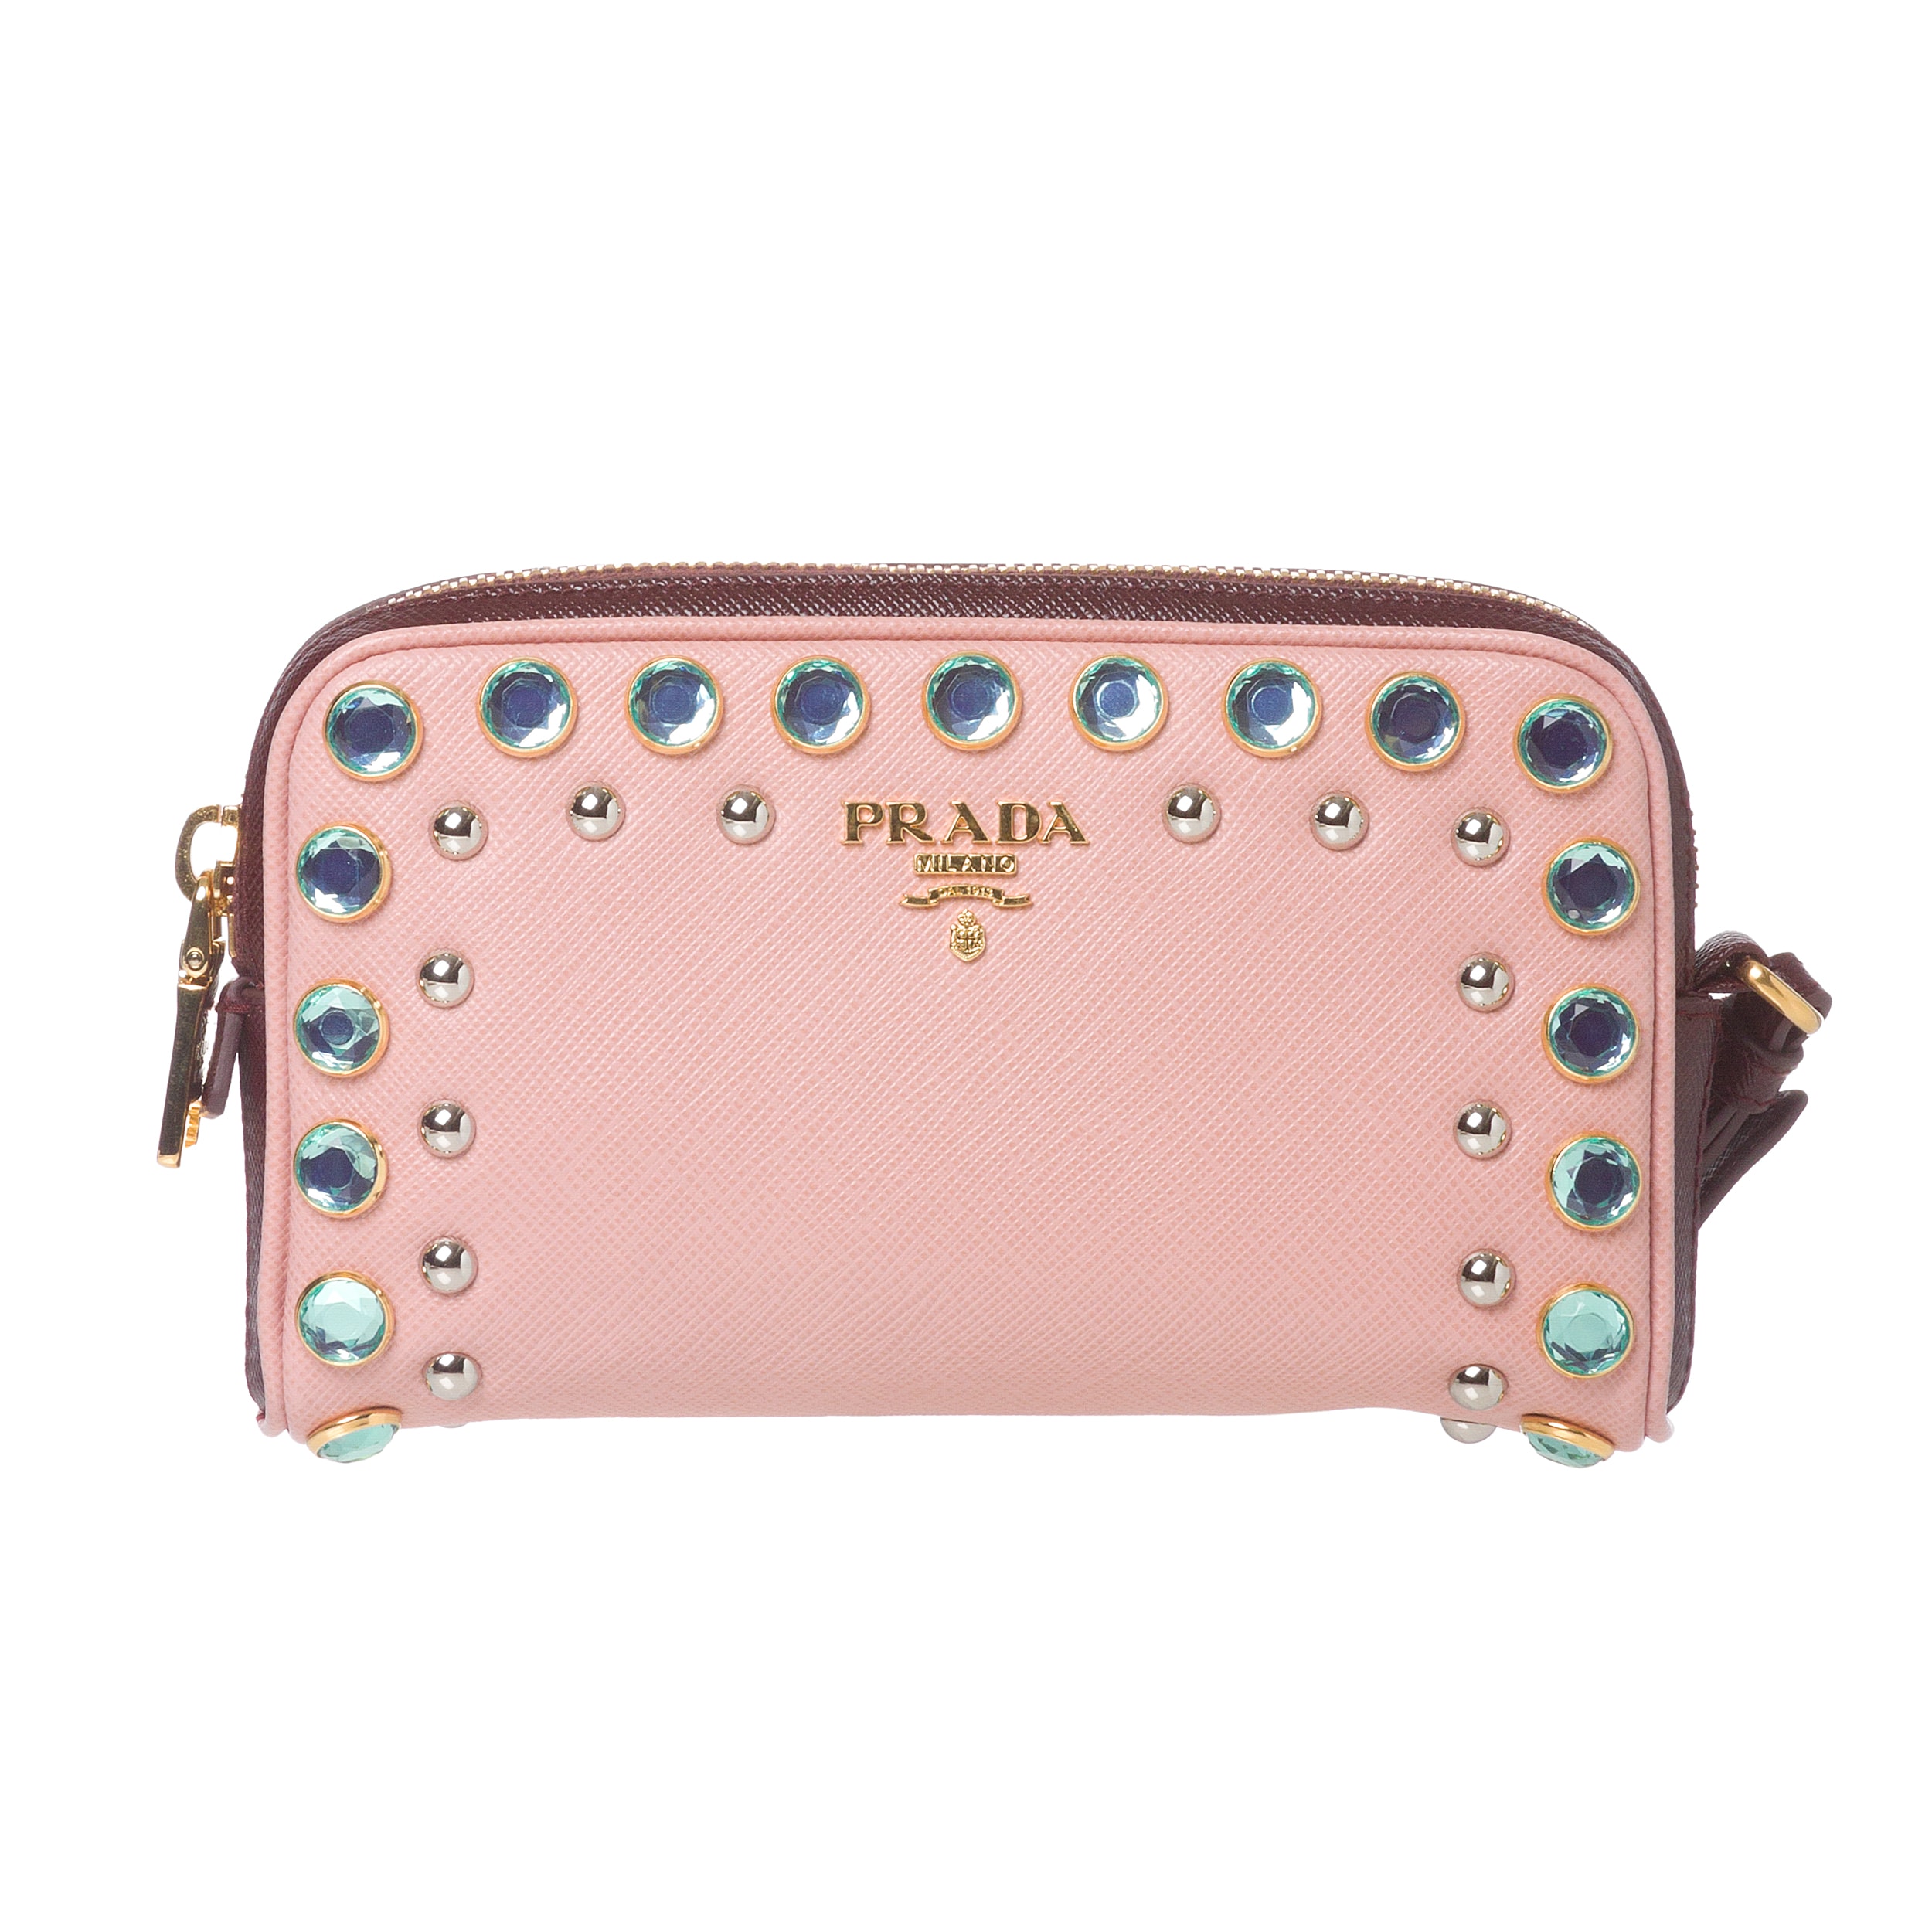 prada ostrich purse - Prada Jeweled Light Pink Leather Wristlet - 14349656 - Overstock ...